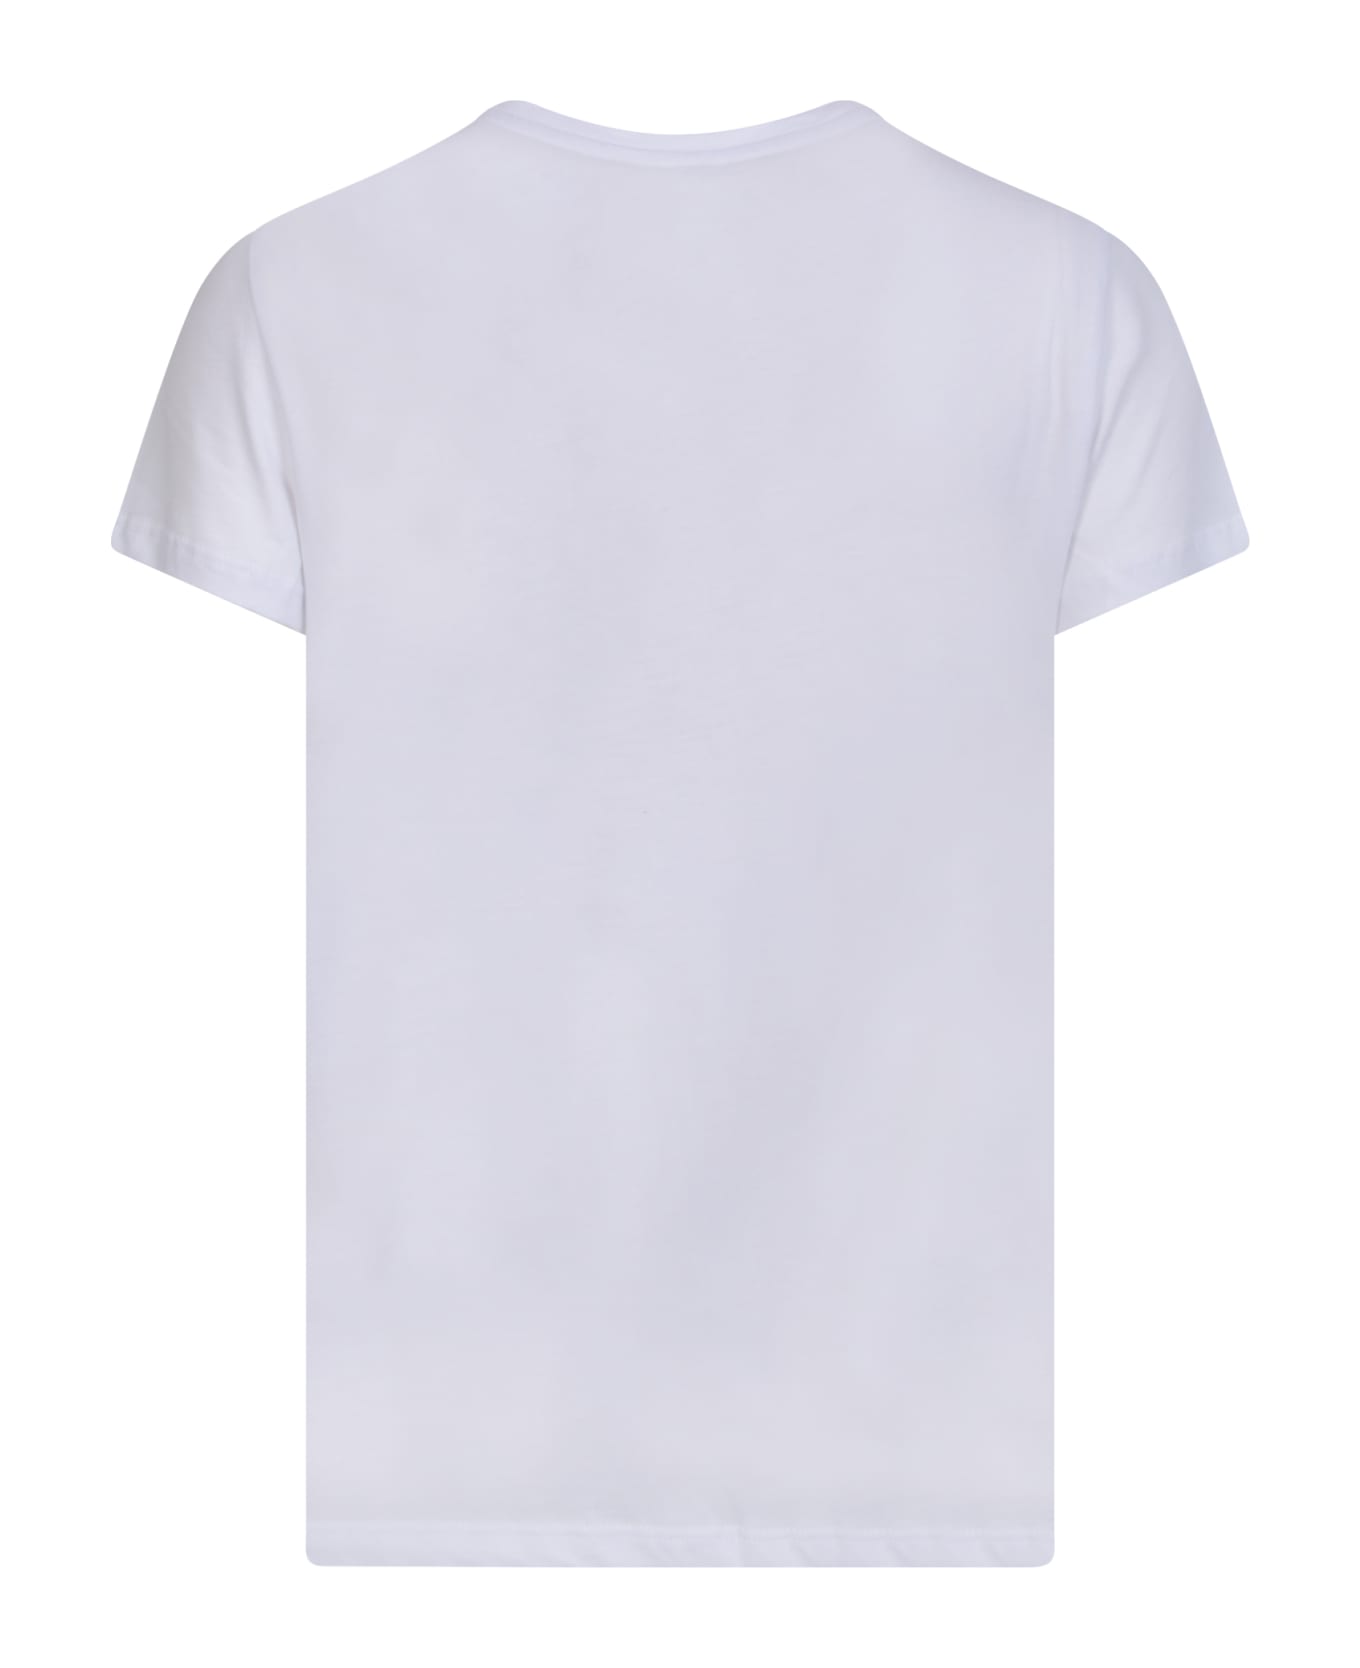 Liu-Jo Rhinestone Details White T-shirt By Liu Jo - White